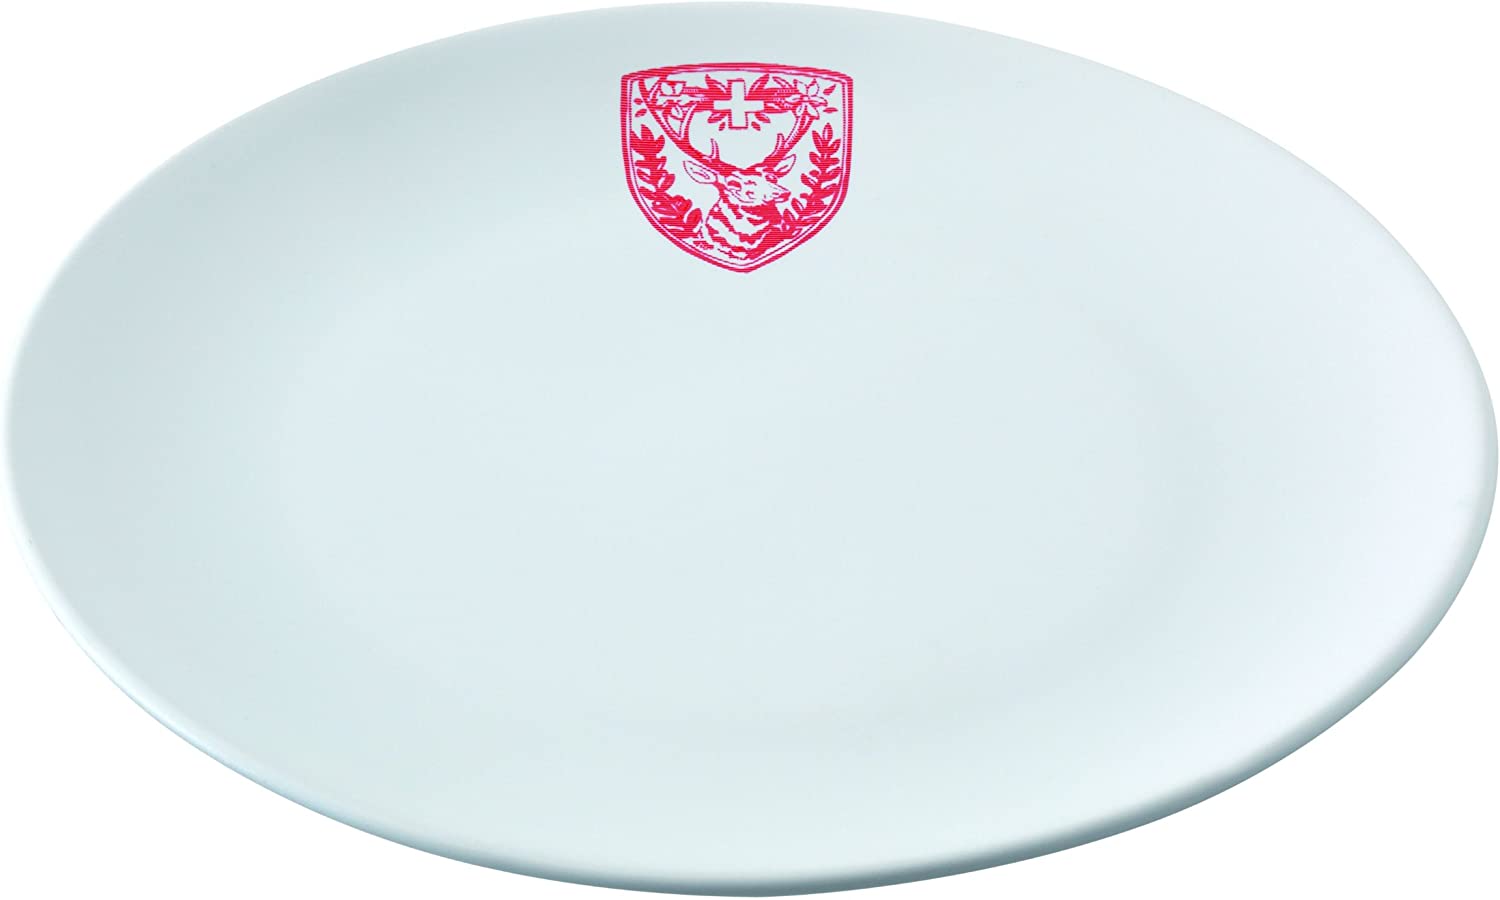 Kuhn Rikon Karo Hirsch 32191 Cheese Fondue Plate with Deer Emblem 20 cm